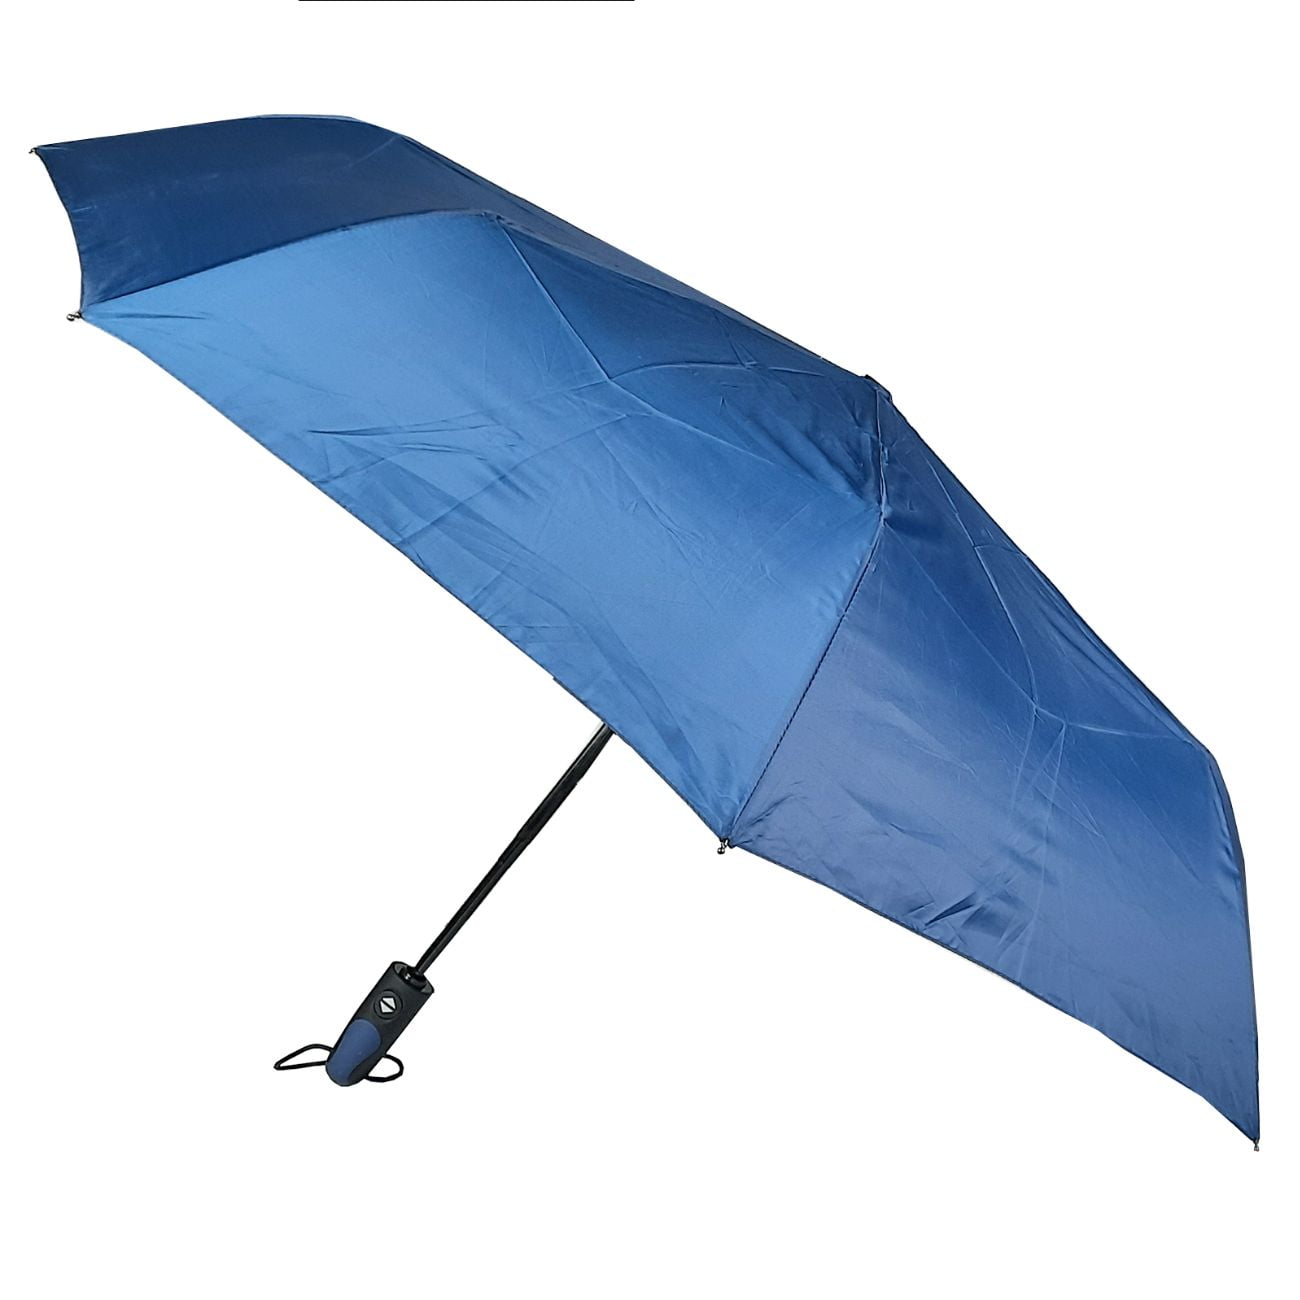 Blue auto compact umbrella opened